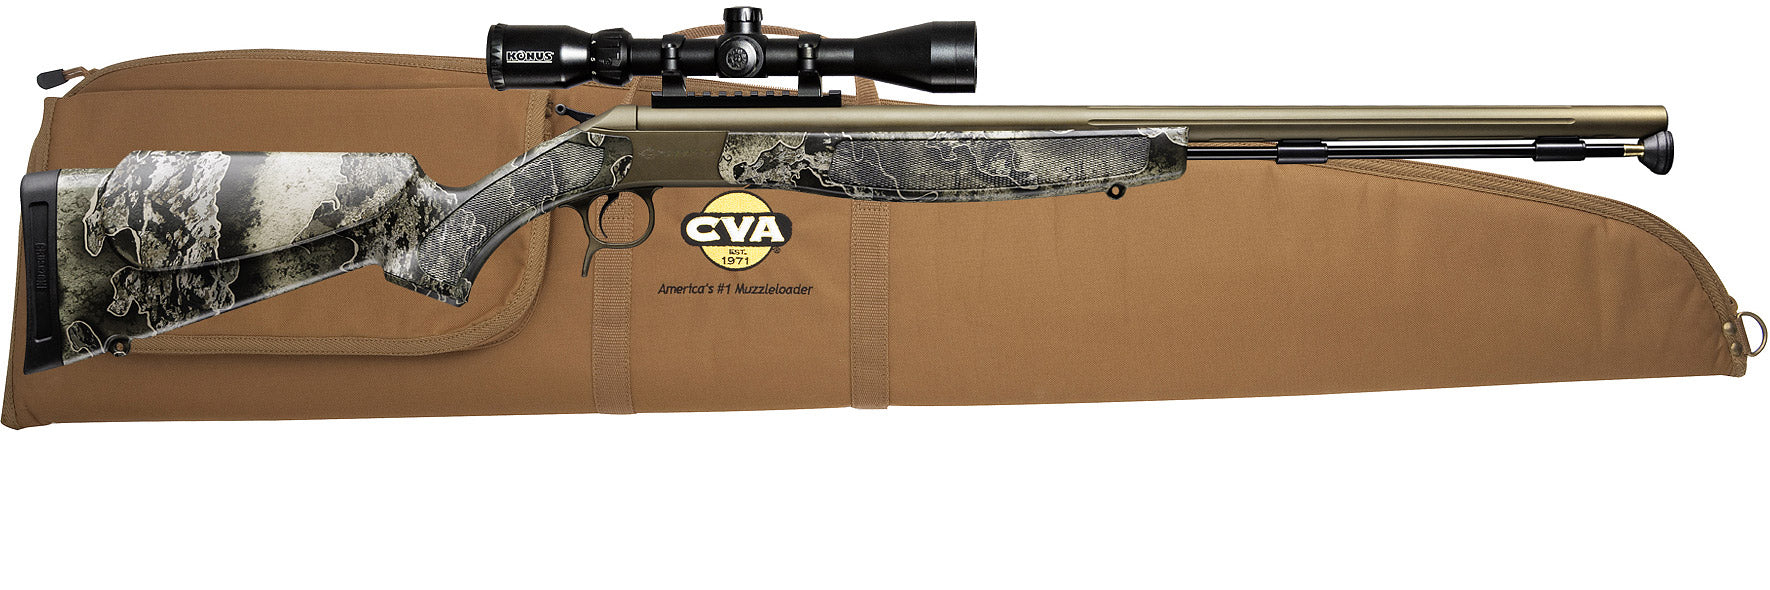 CVA Crossfire Camo & Cerakote With Konus Scope and CVA rifle case